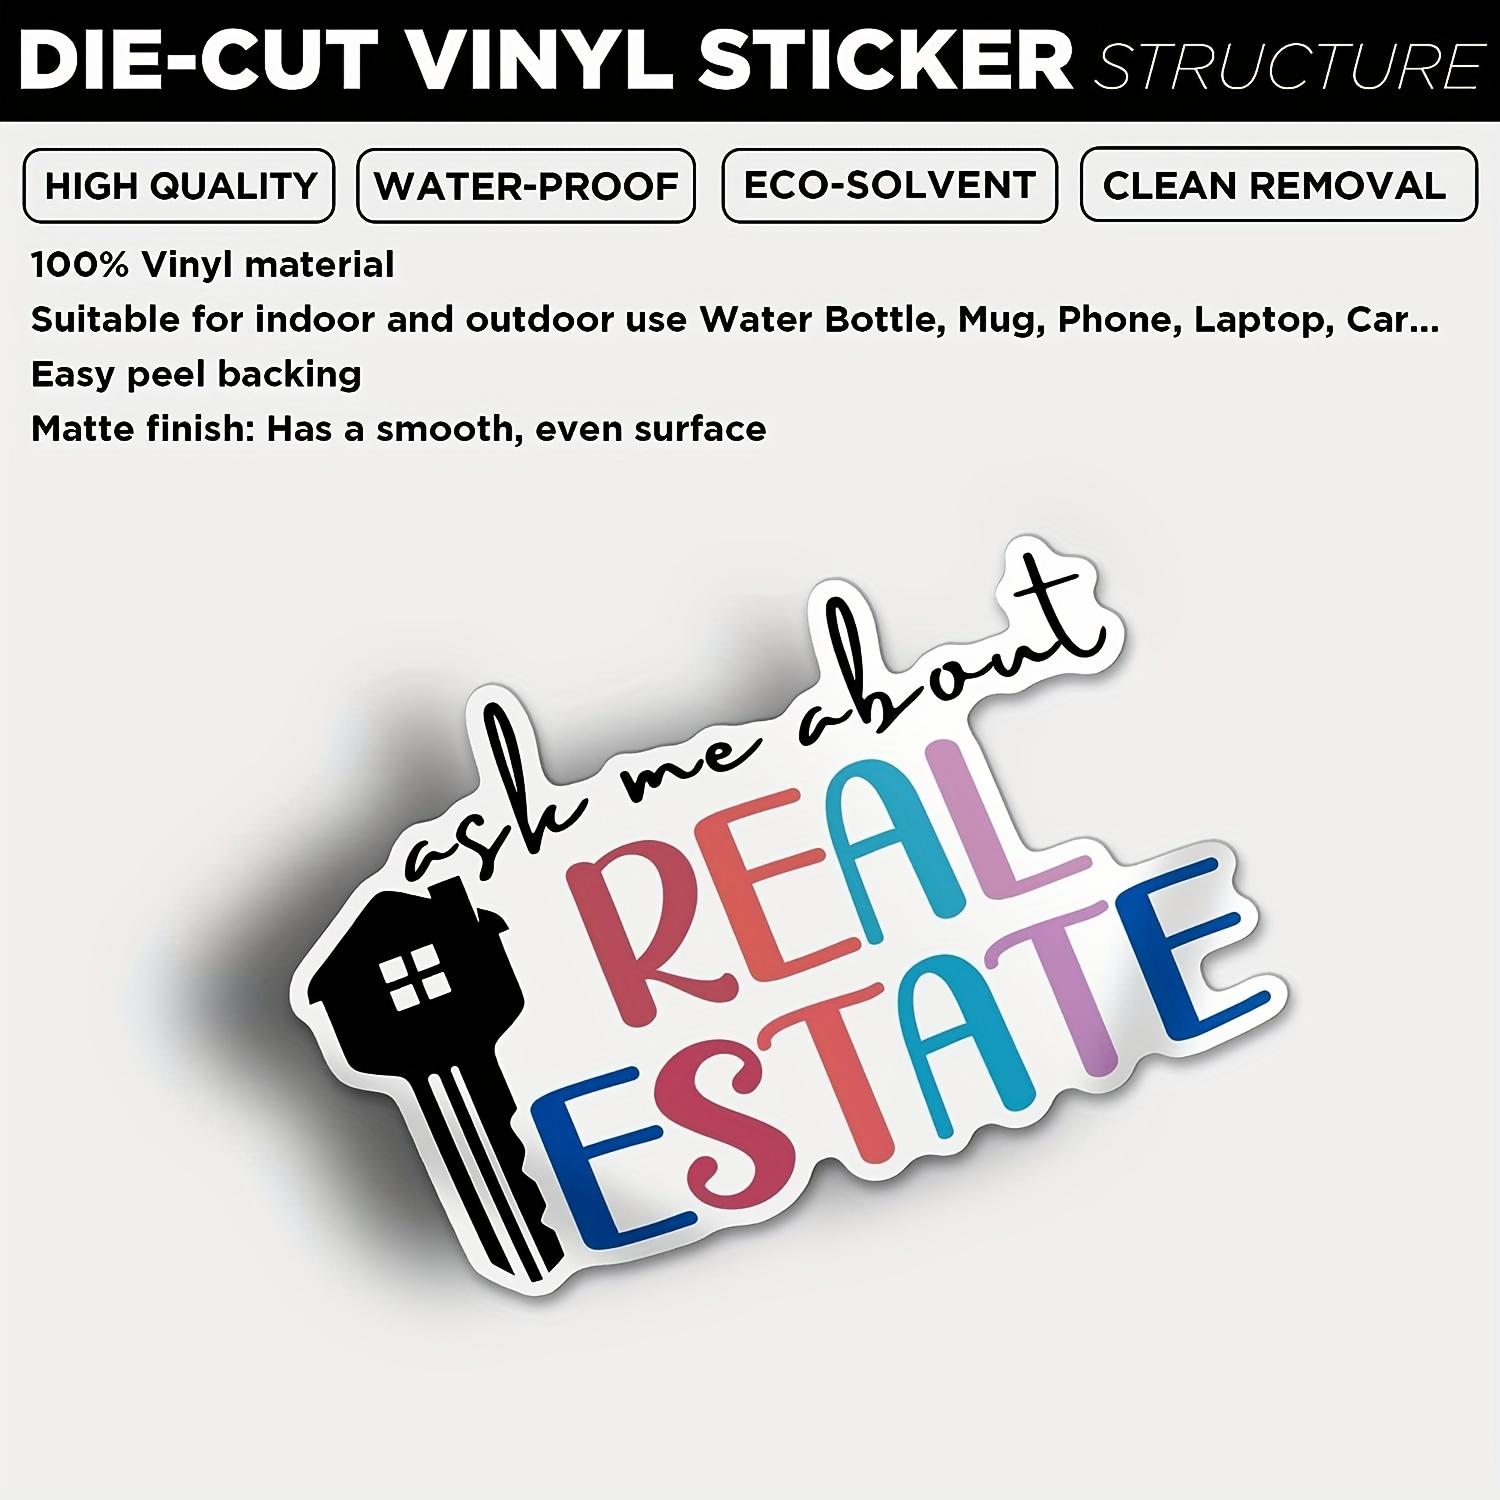 Days of The Week Sticker Vinyl Waterproof Sticker Decal Car Laptop Wall  Window Bumper Sticker 5